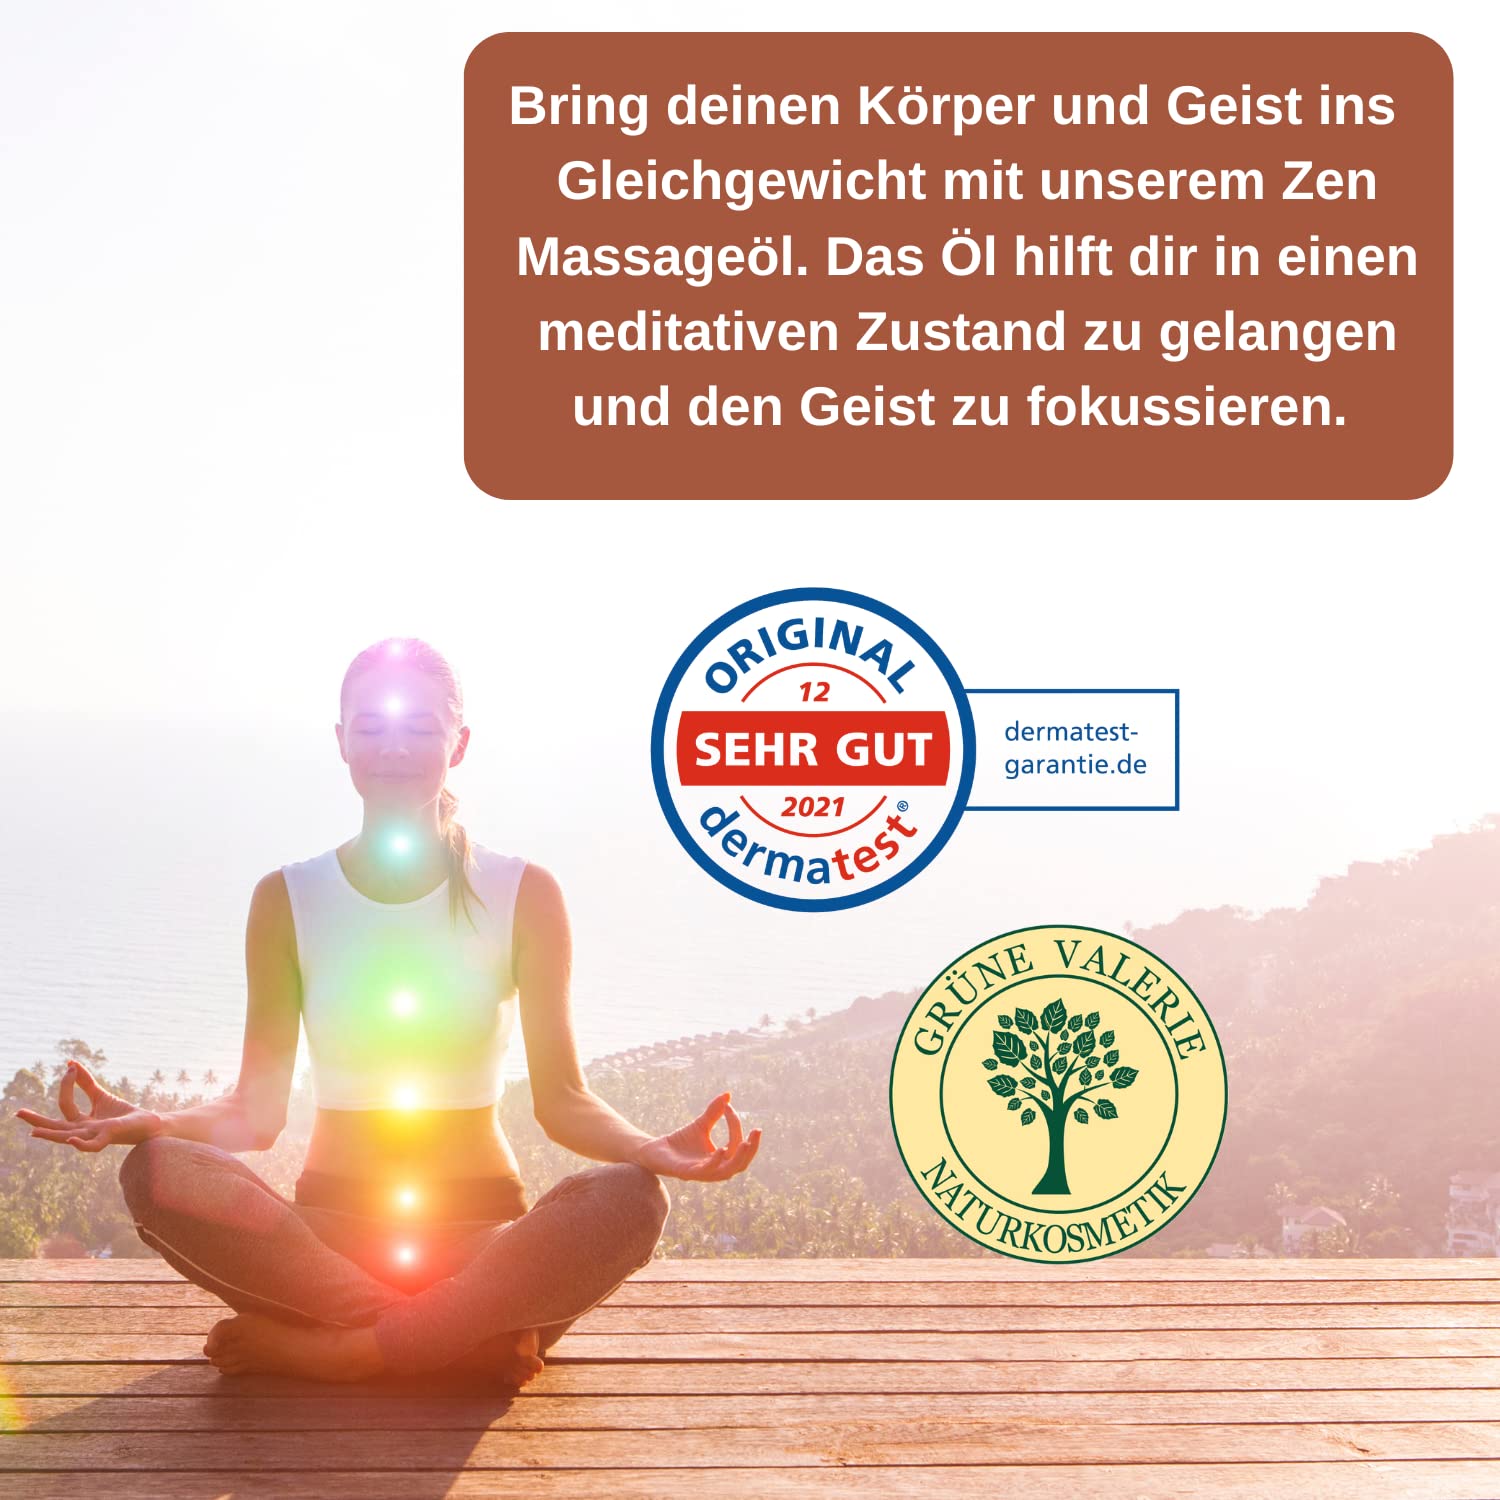 Zen - Massageöl XXL 500 ML - mit süßen Mandeln